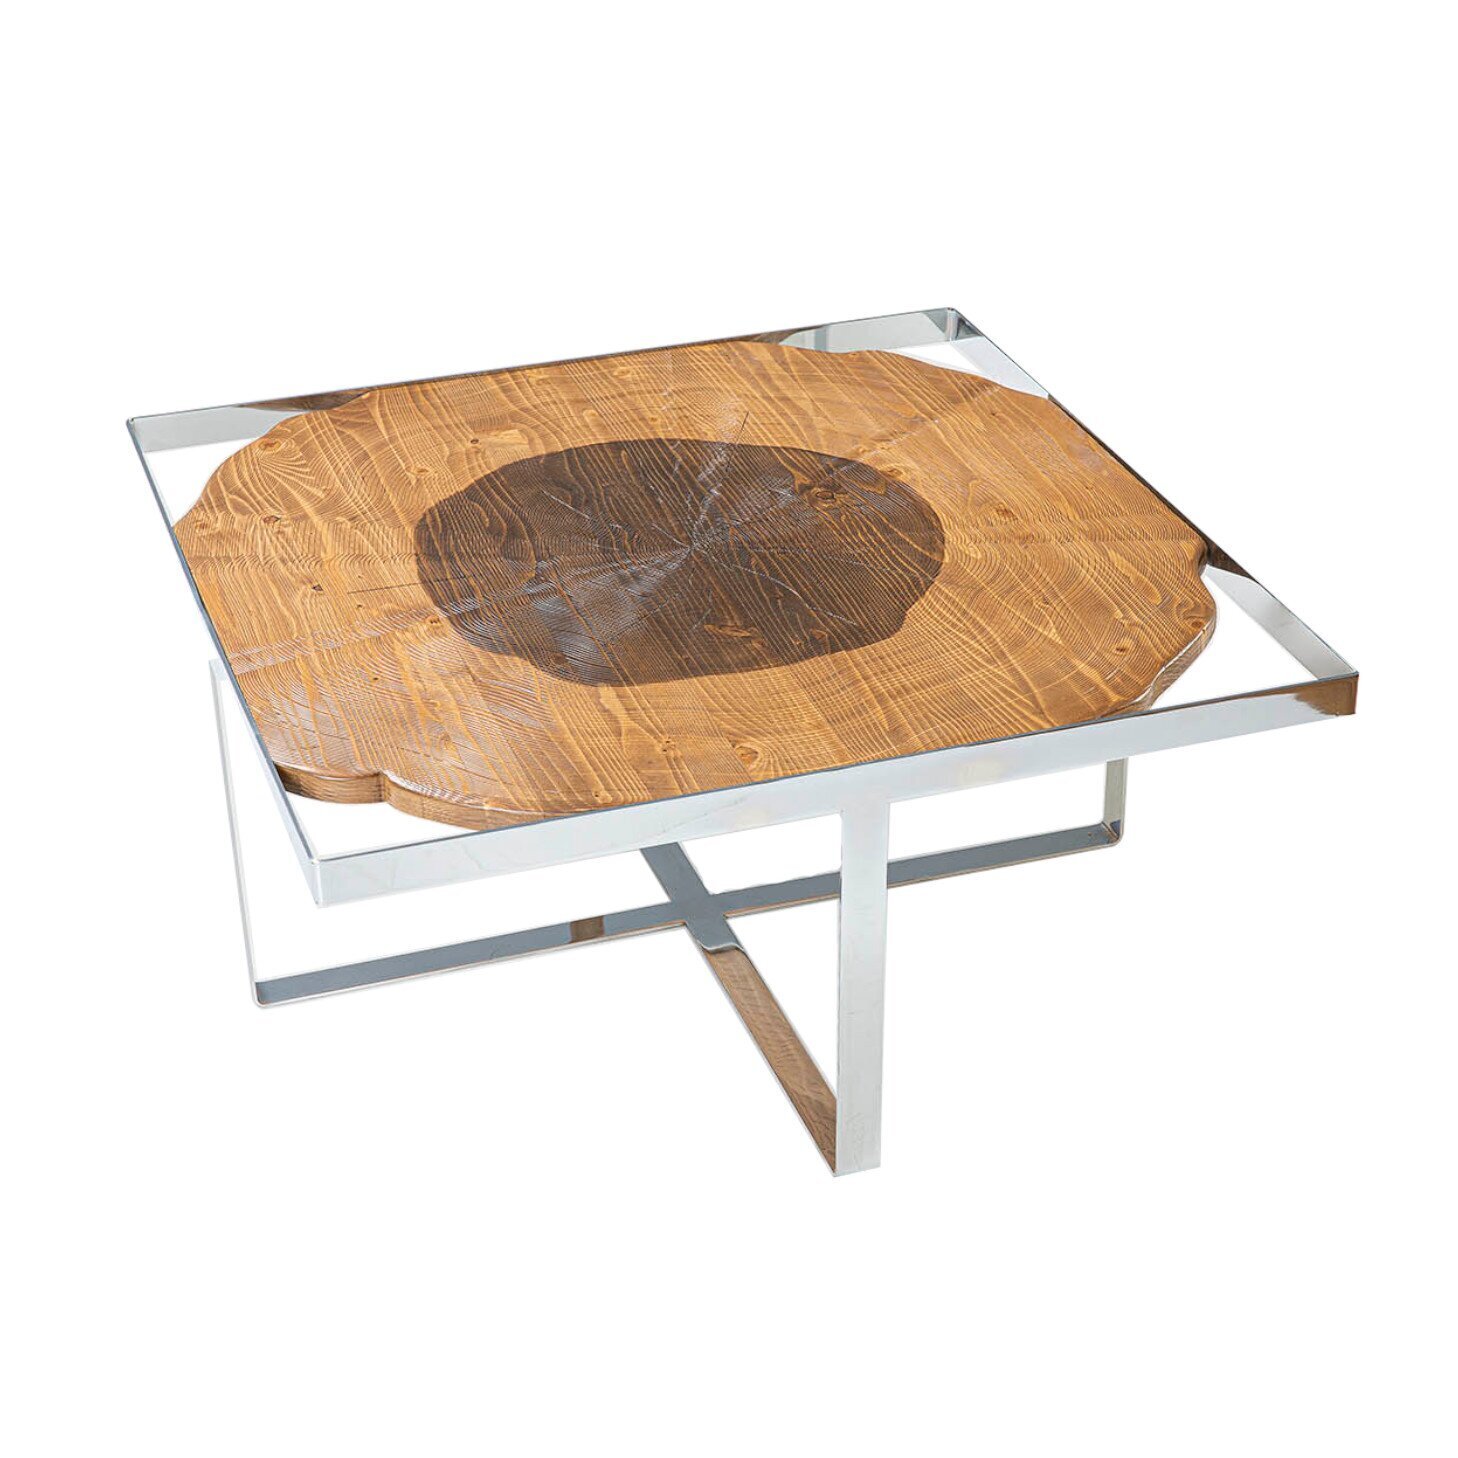 Cross legs chrome and wood coffee table 